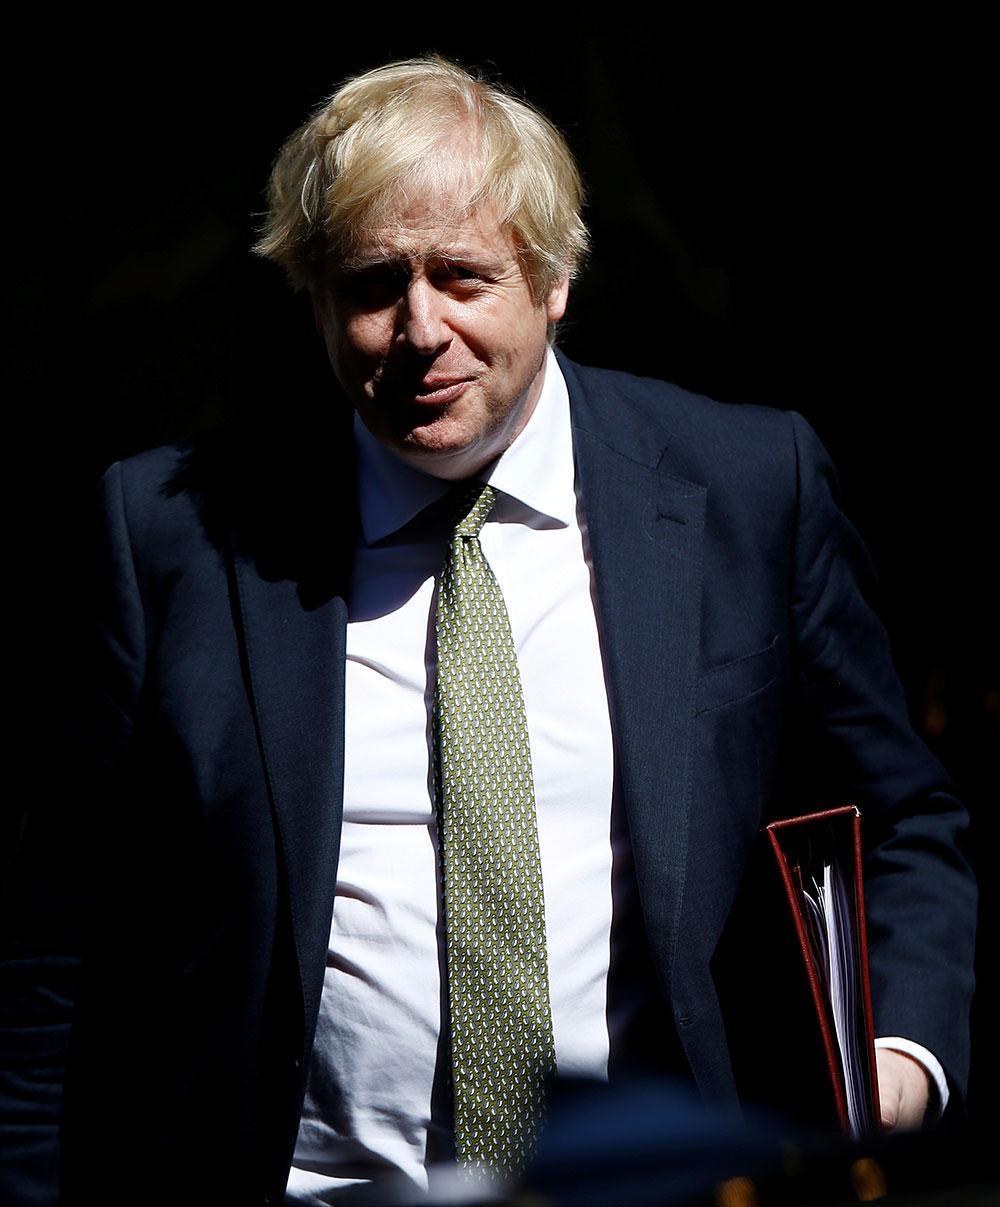 Boris Johnsona corona virüs ahı: Ölmesini istedim